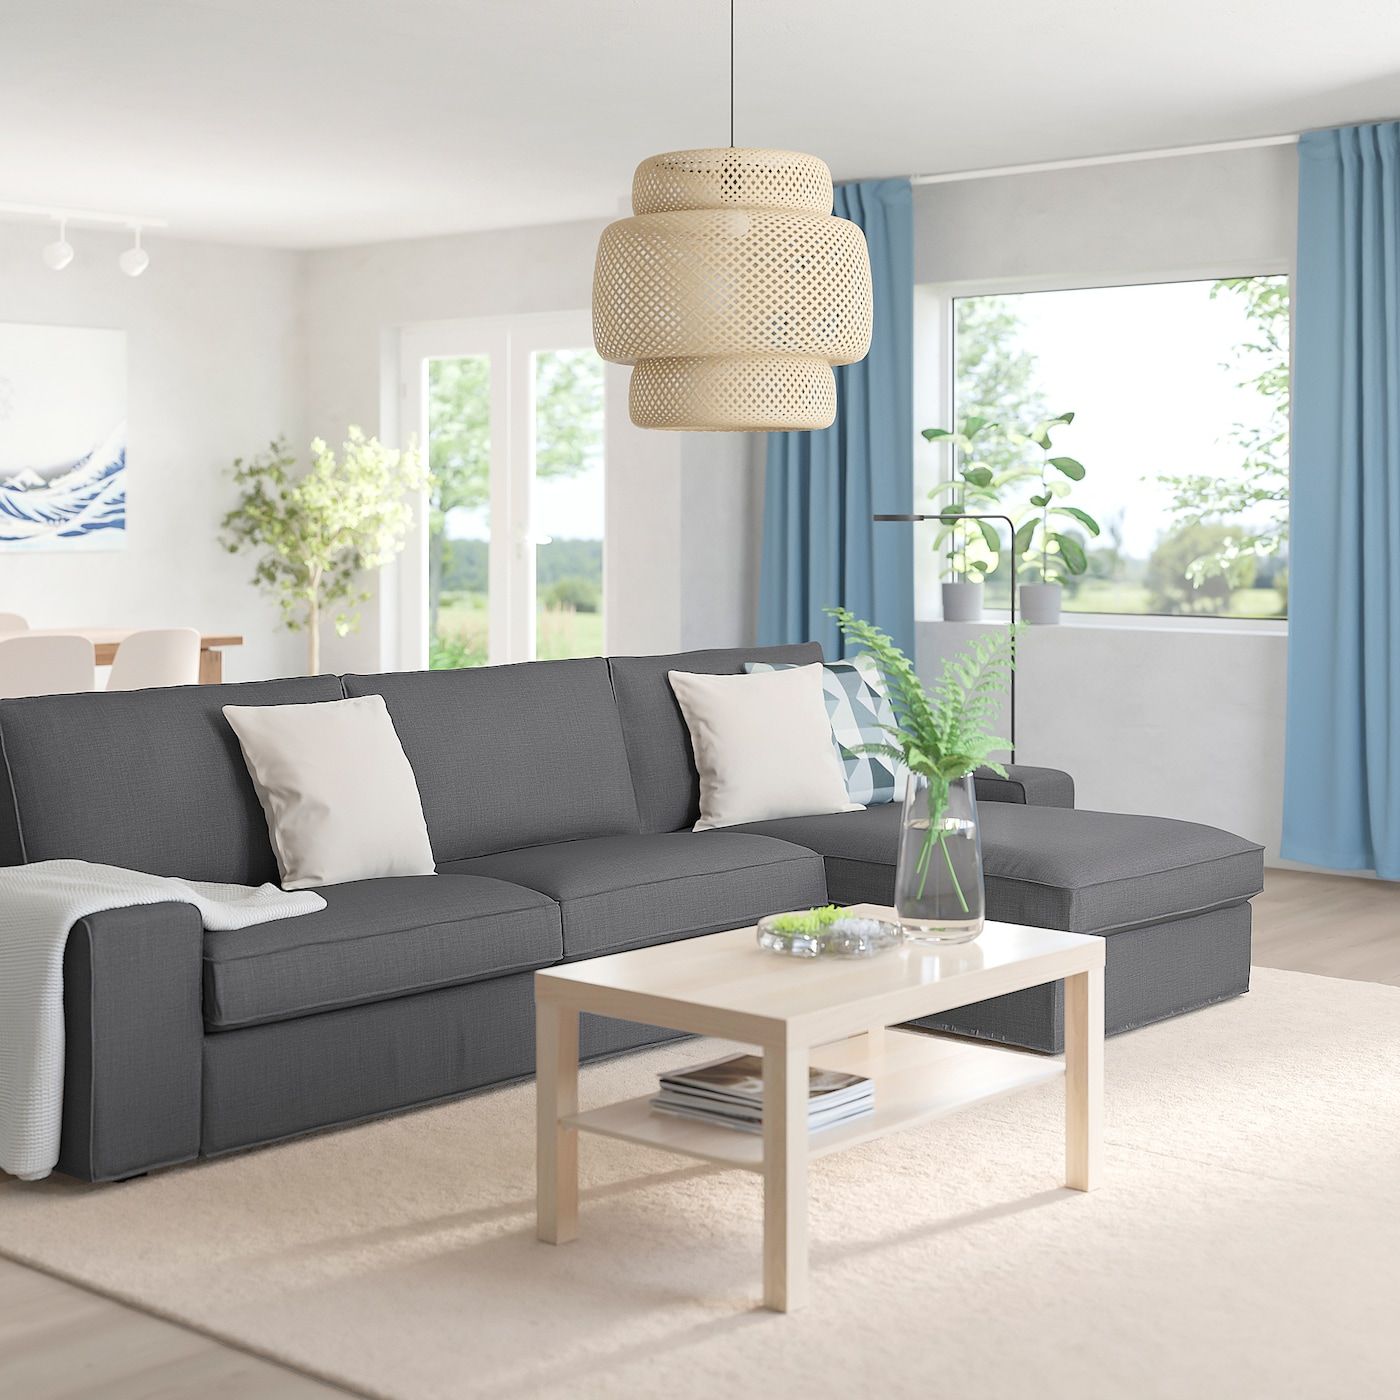 An In-Depth Look at the Kivik Sofa from IKEA缩略图